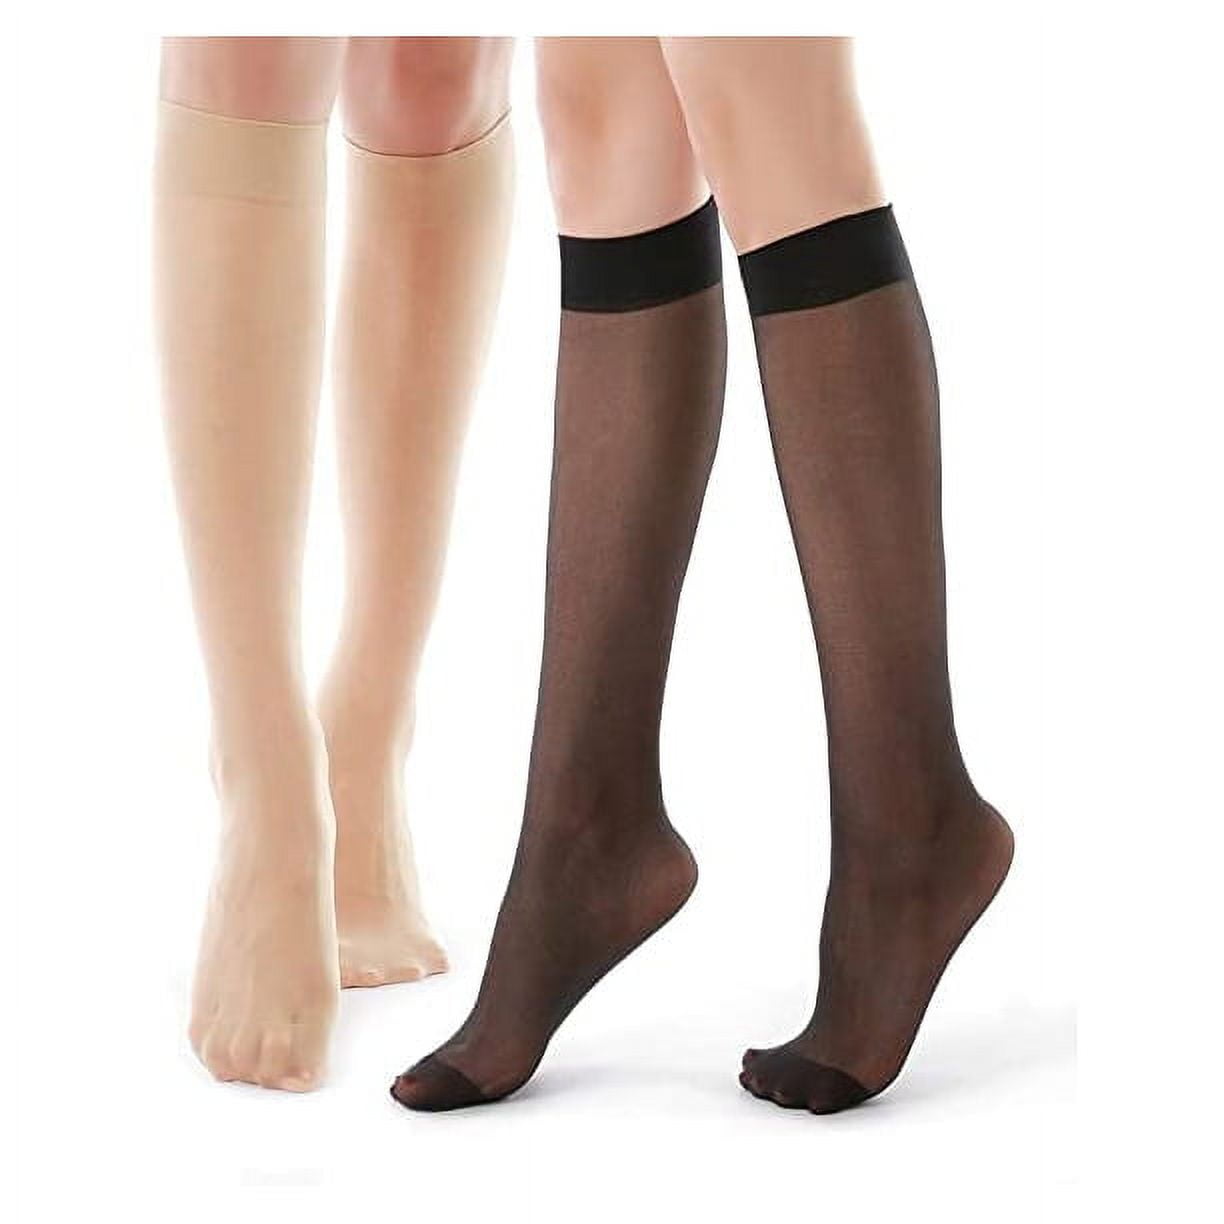 Adult White Knee-High Stockings